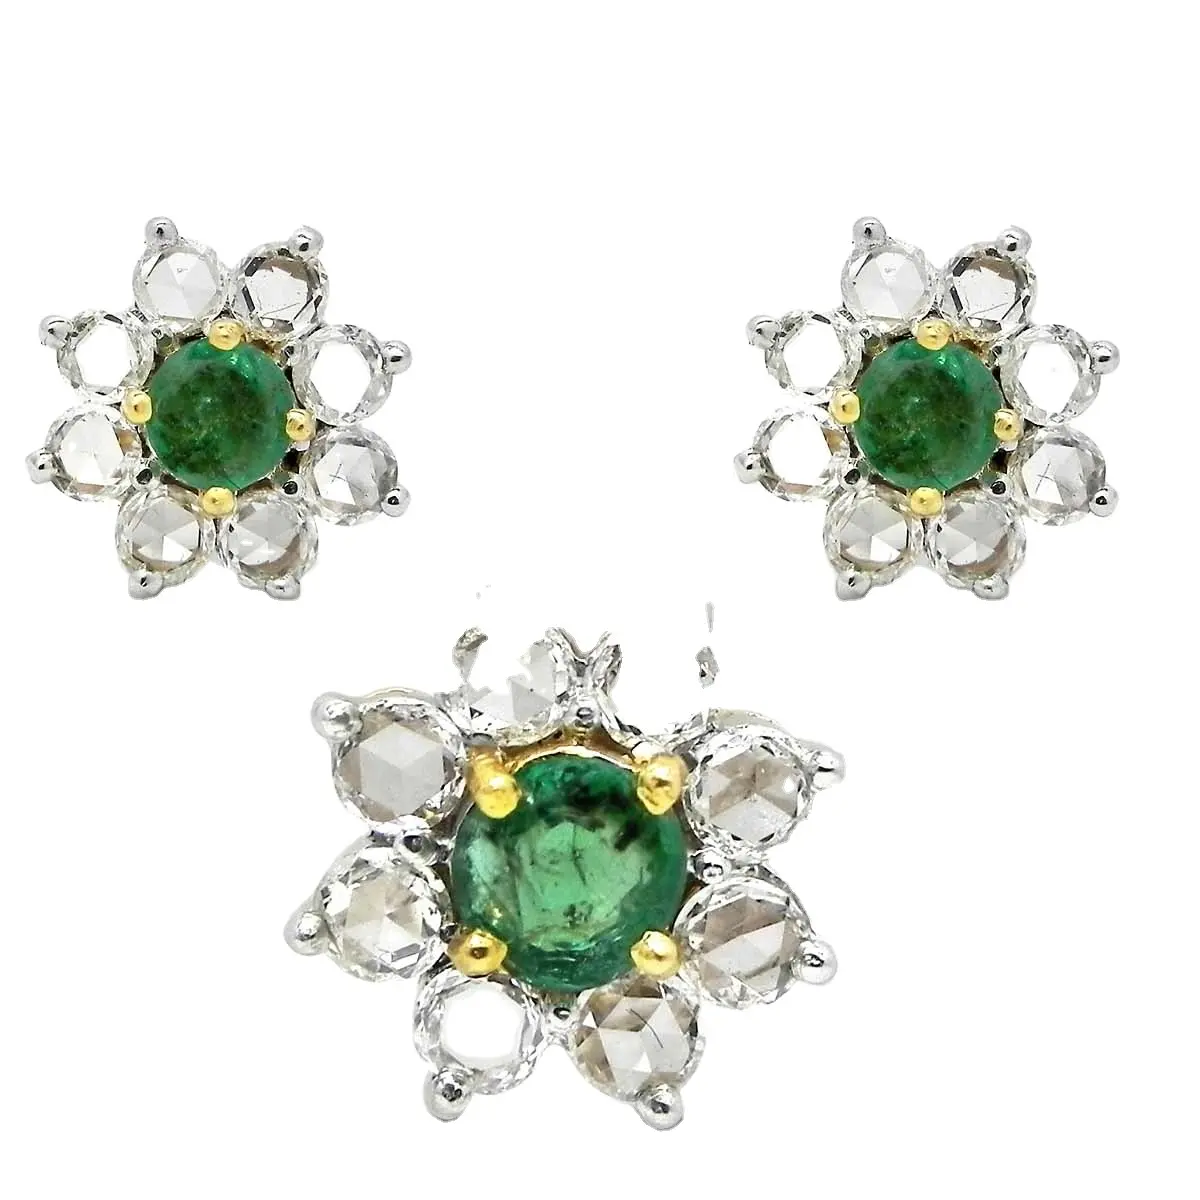 Real Diamond Pendant Set for Women Wholesale Price IGI & Ingemco Certified Top Diamond Jewellery in India Easy to wear pendant